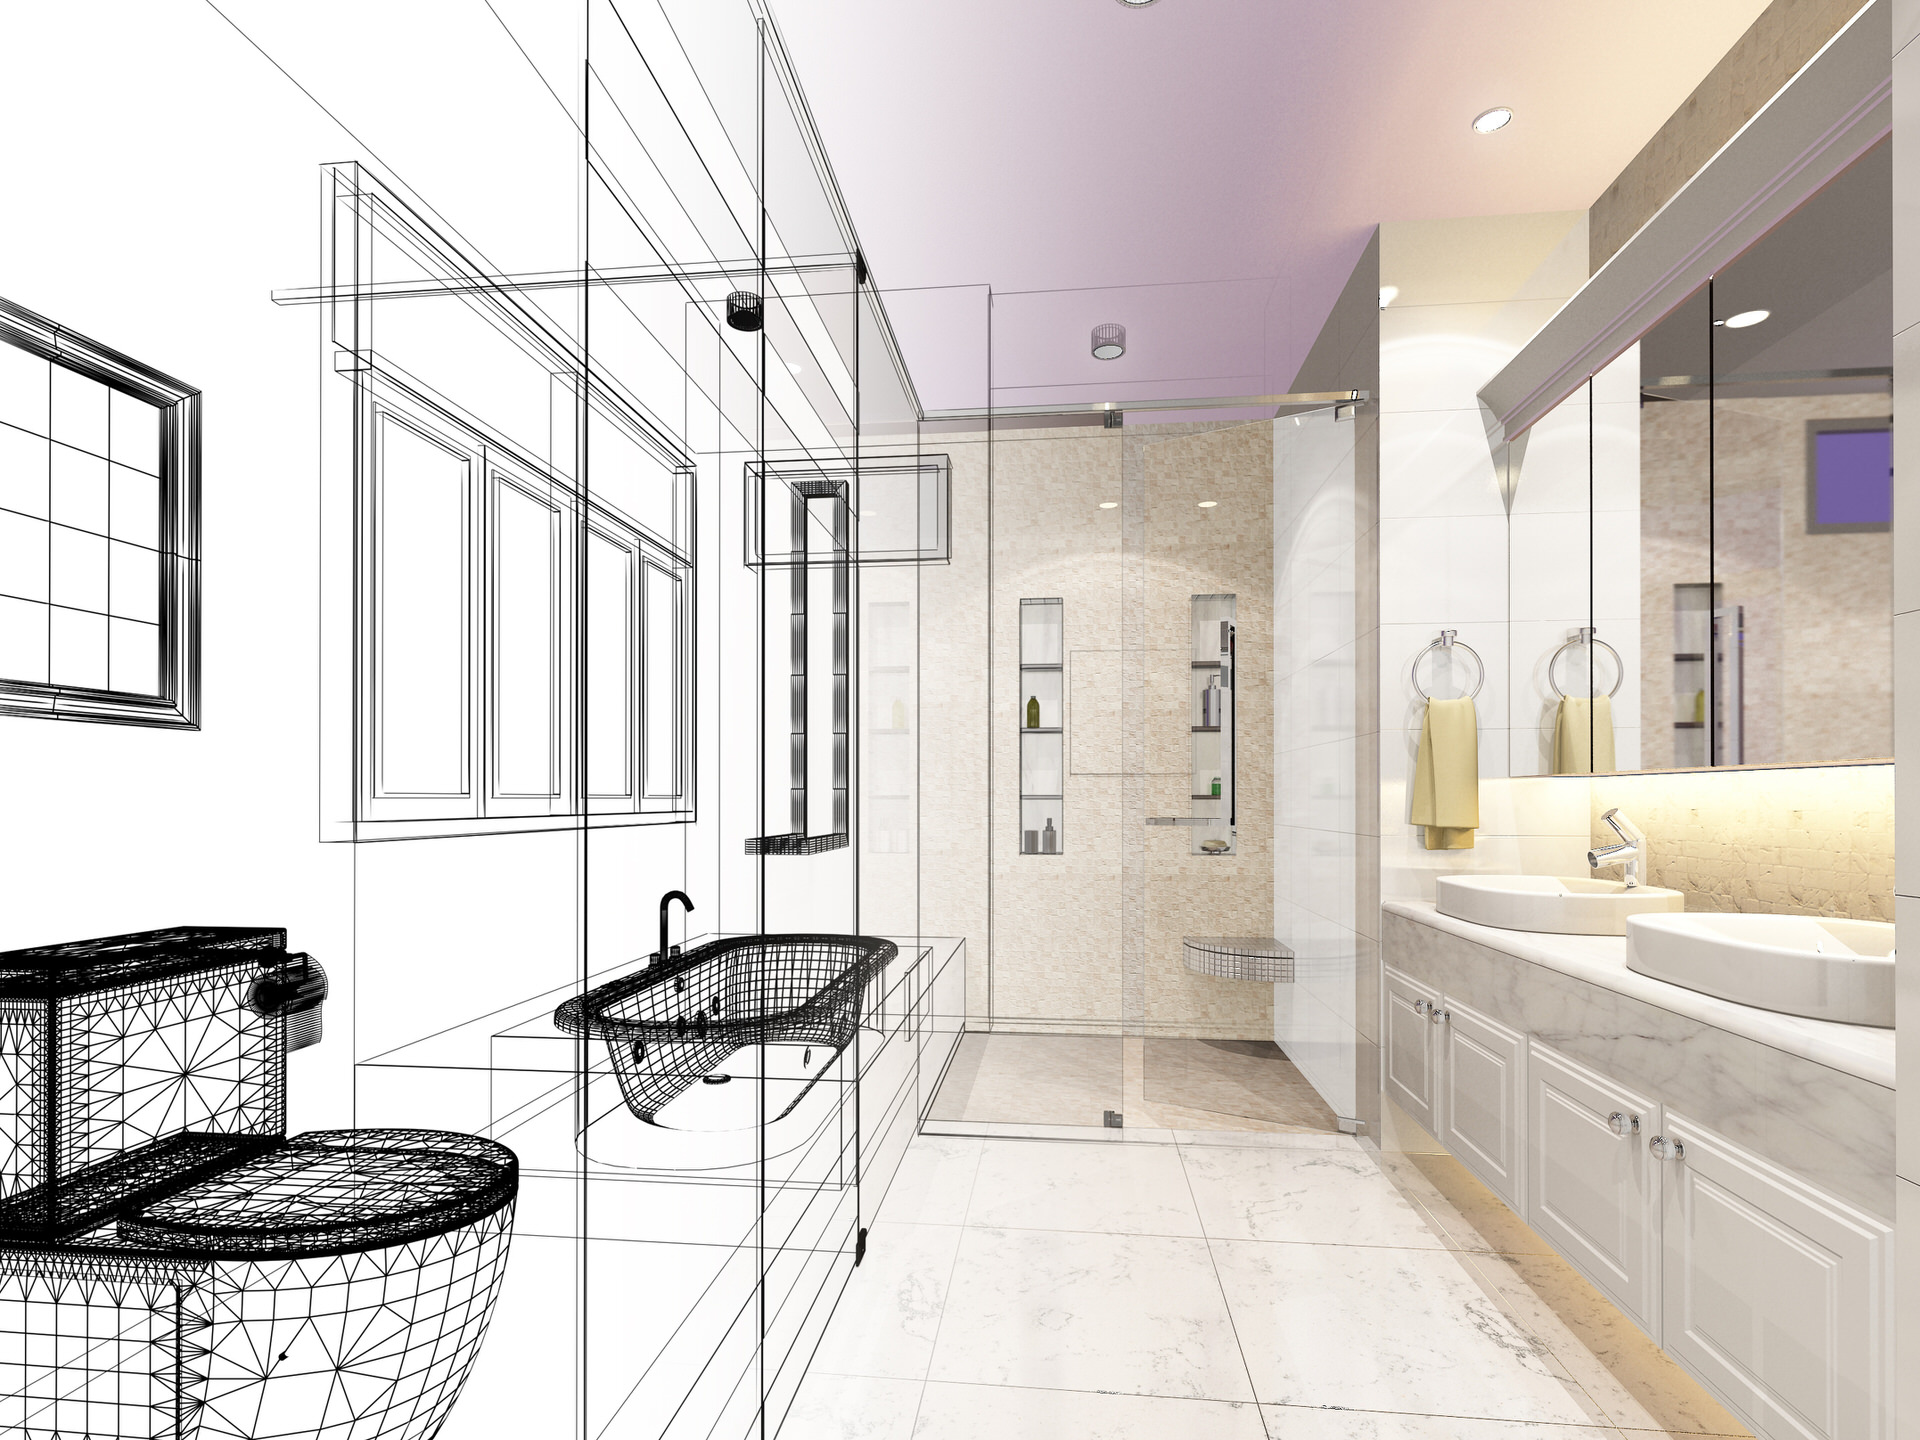 г образная ванная комната дизайн проект